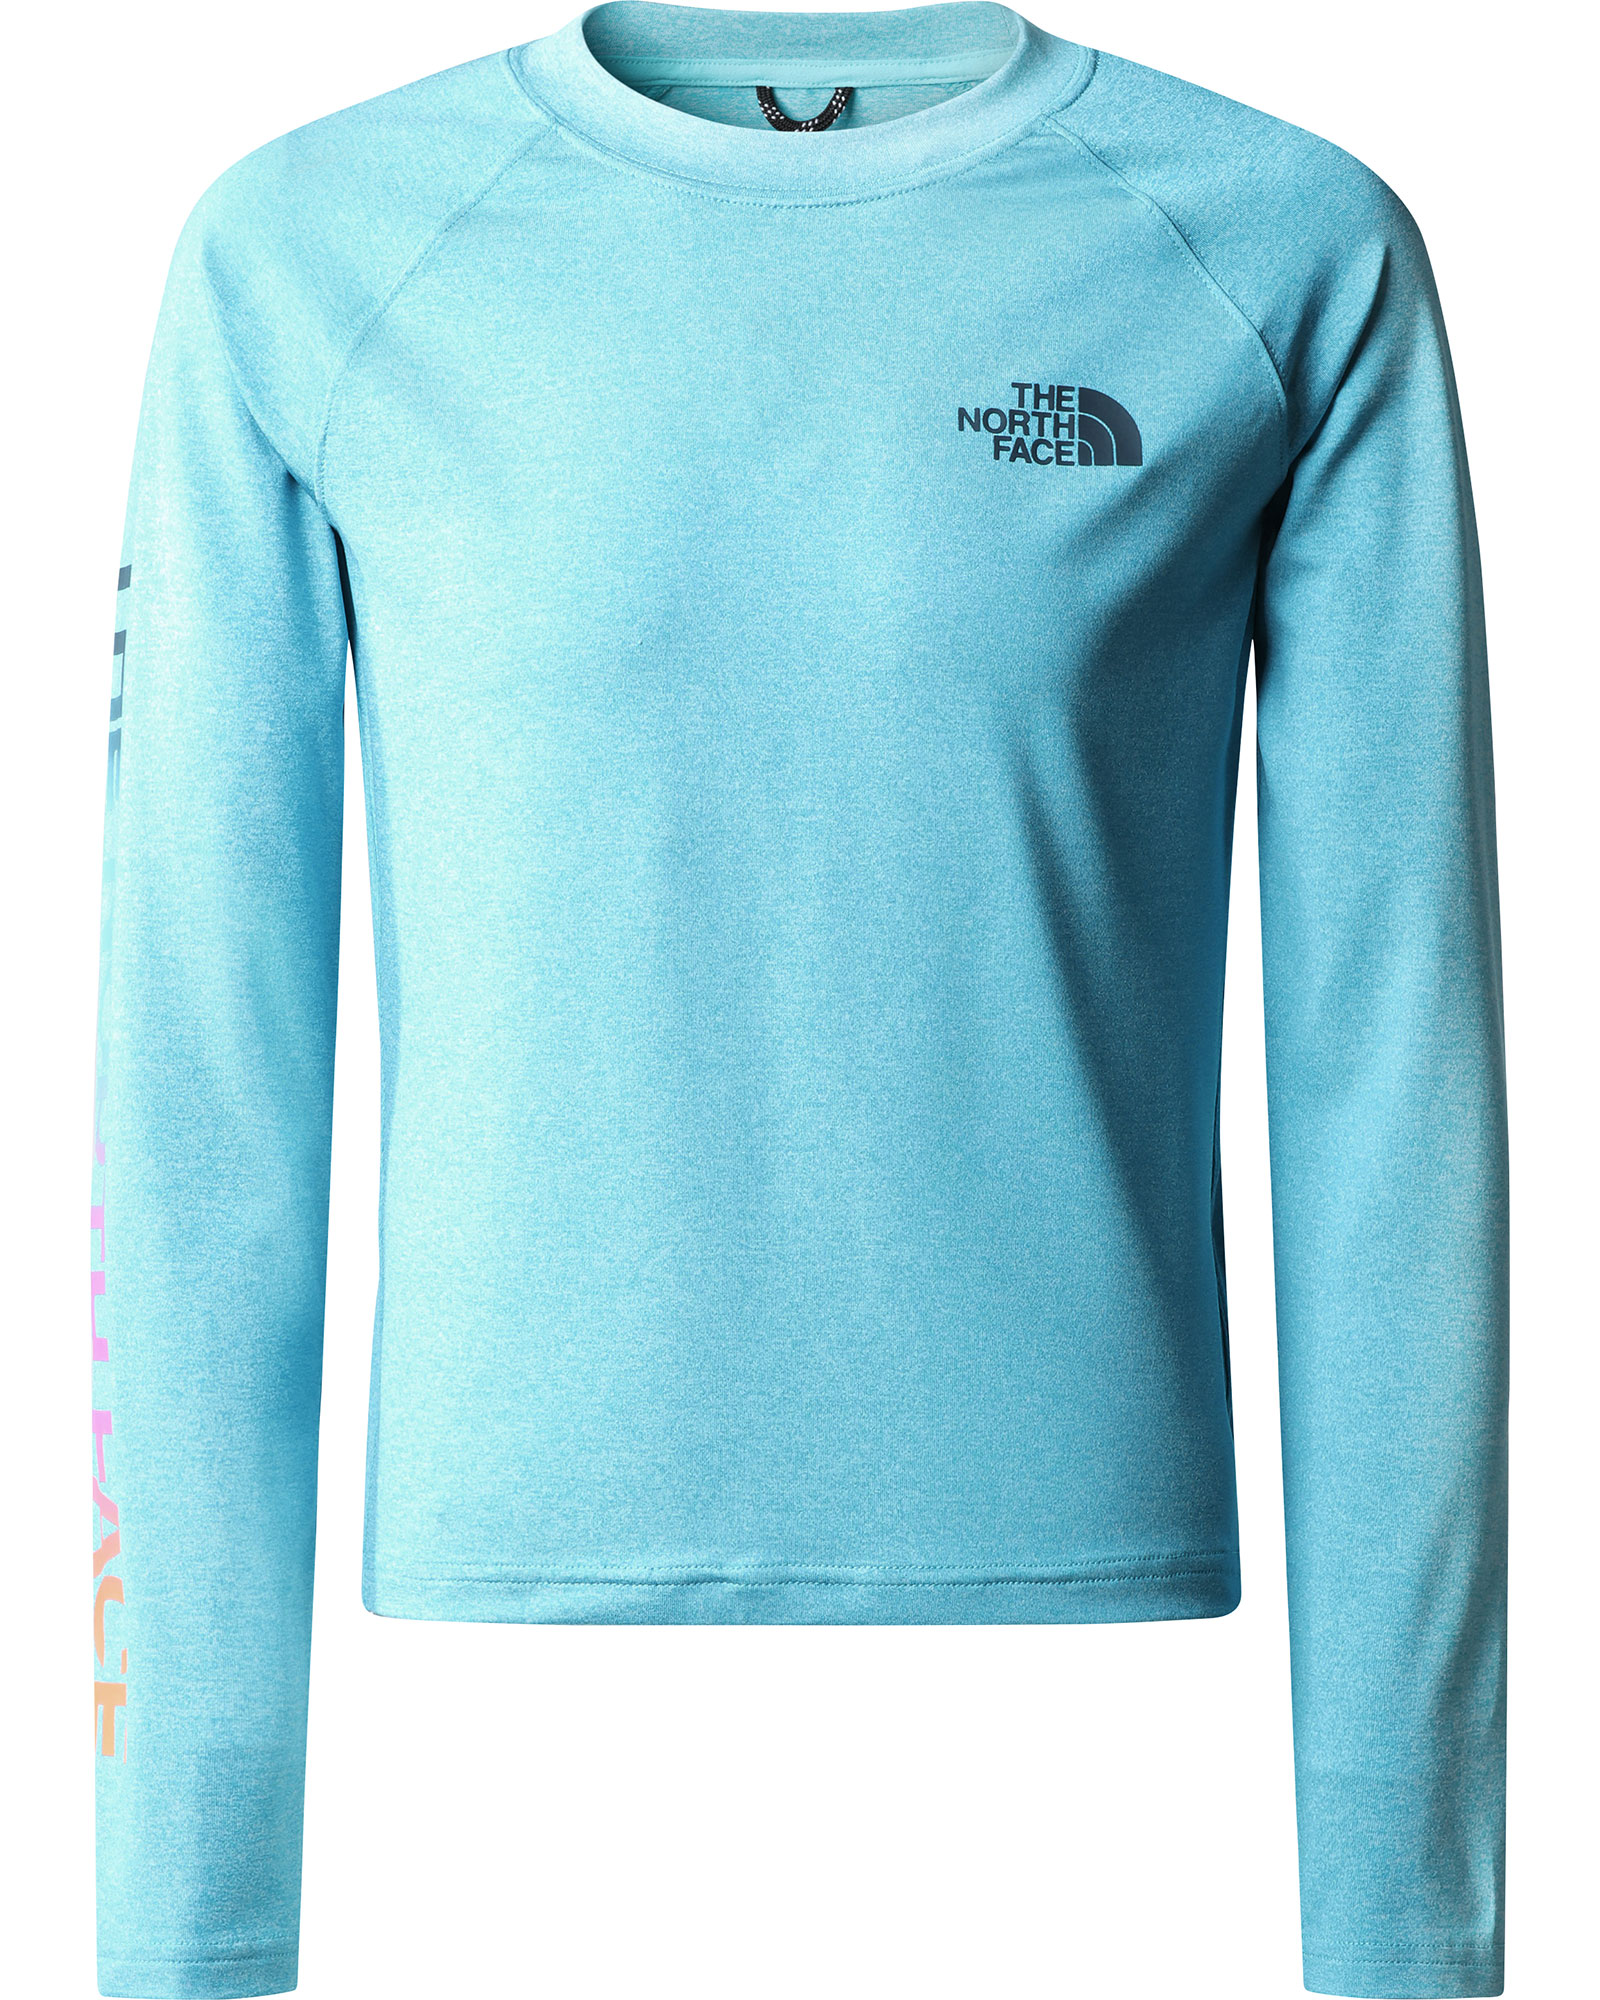 The North Face Girl’s Amphibious Long Sleeved Sun T Shirt - Scuba Blue M